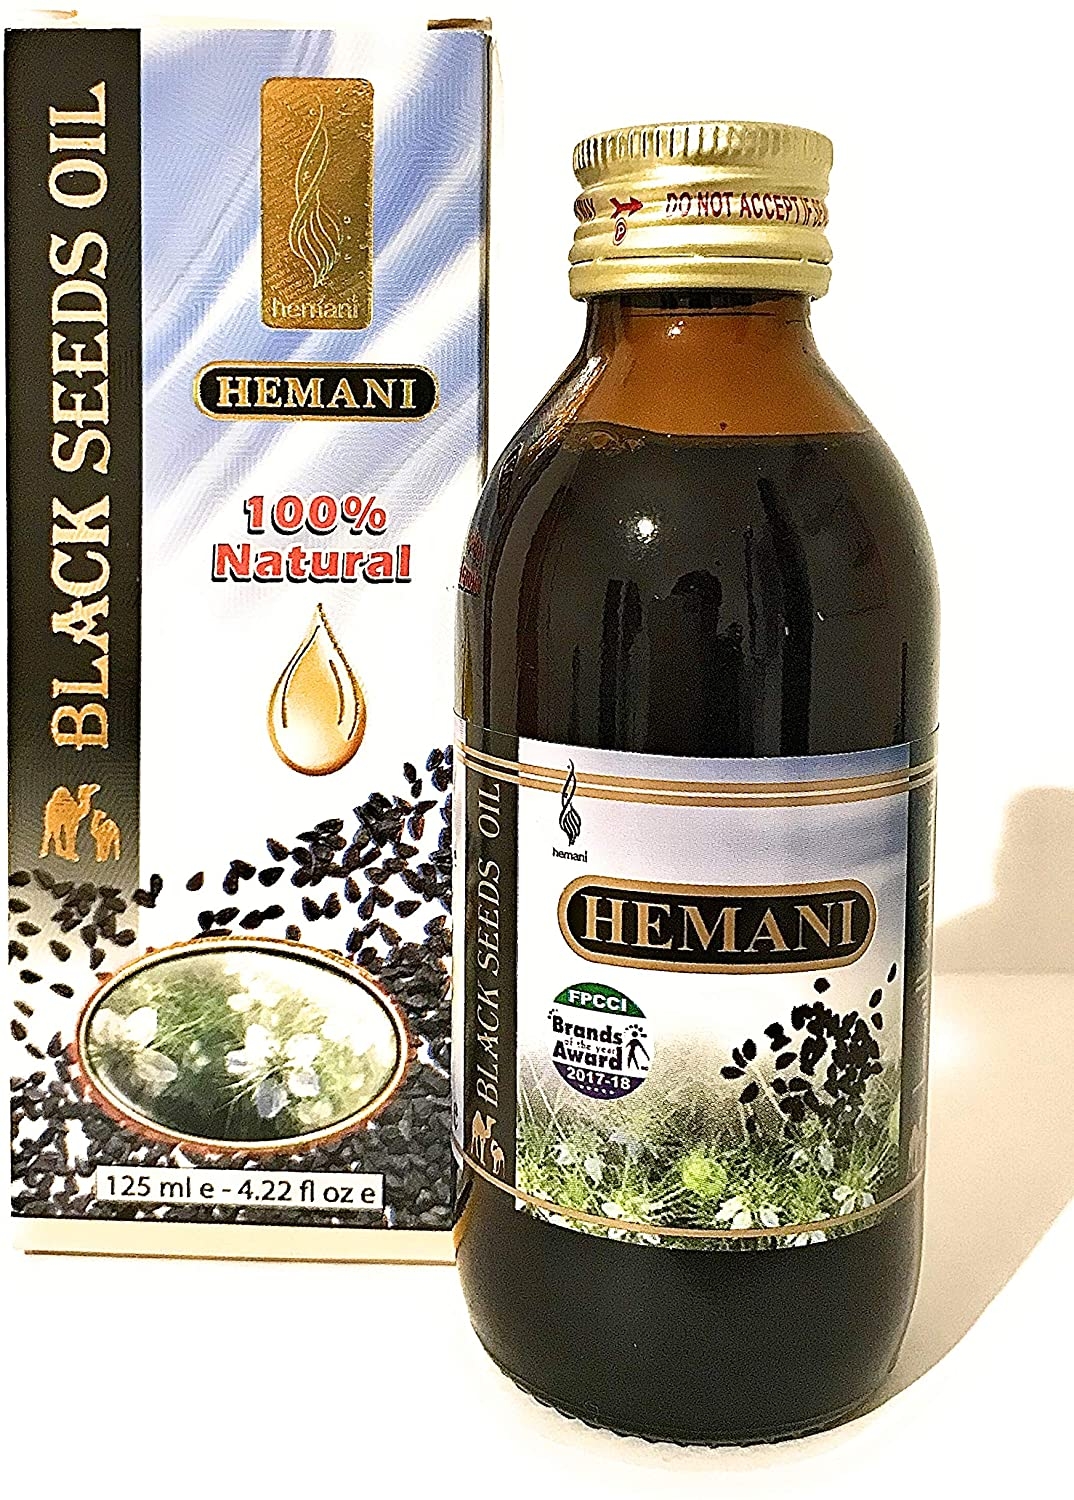 Hemani 100% Natural Black Seed Oil 125ml – The Oud Co.